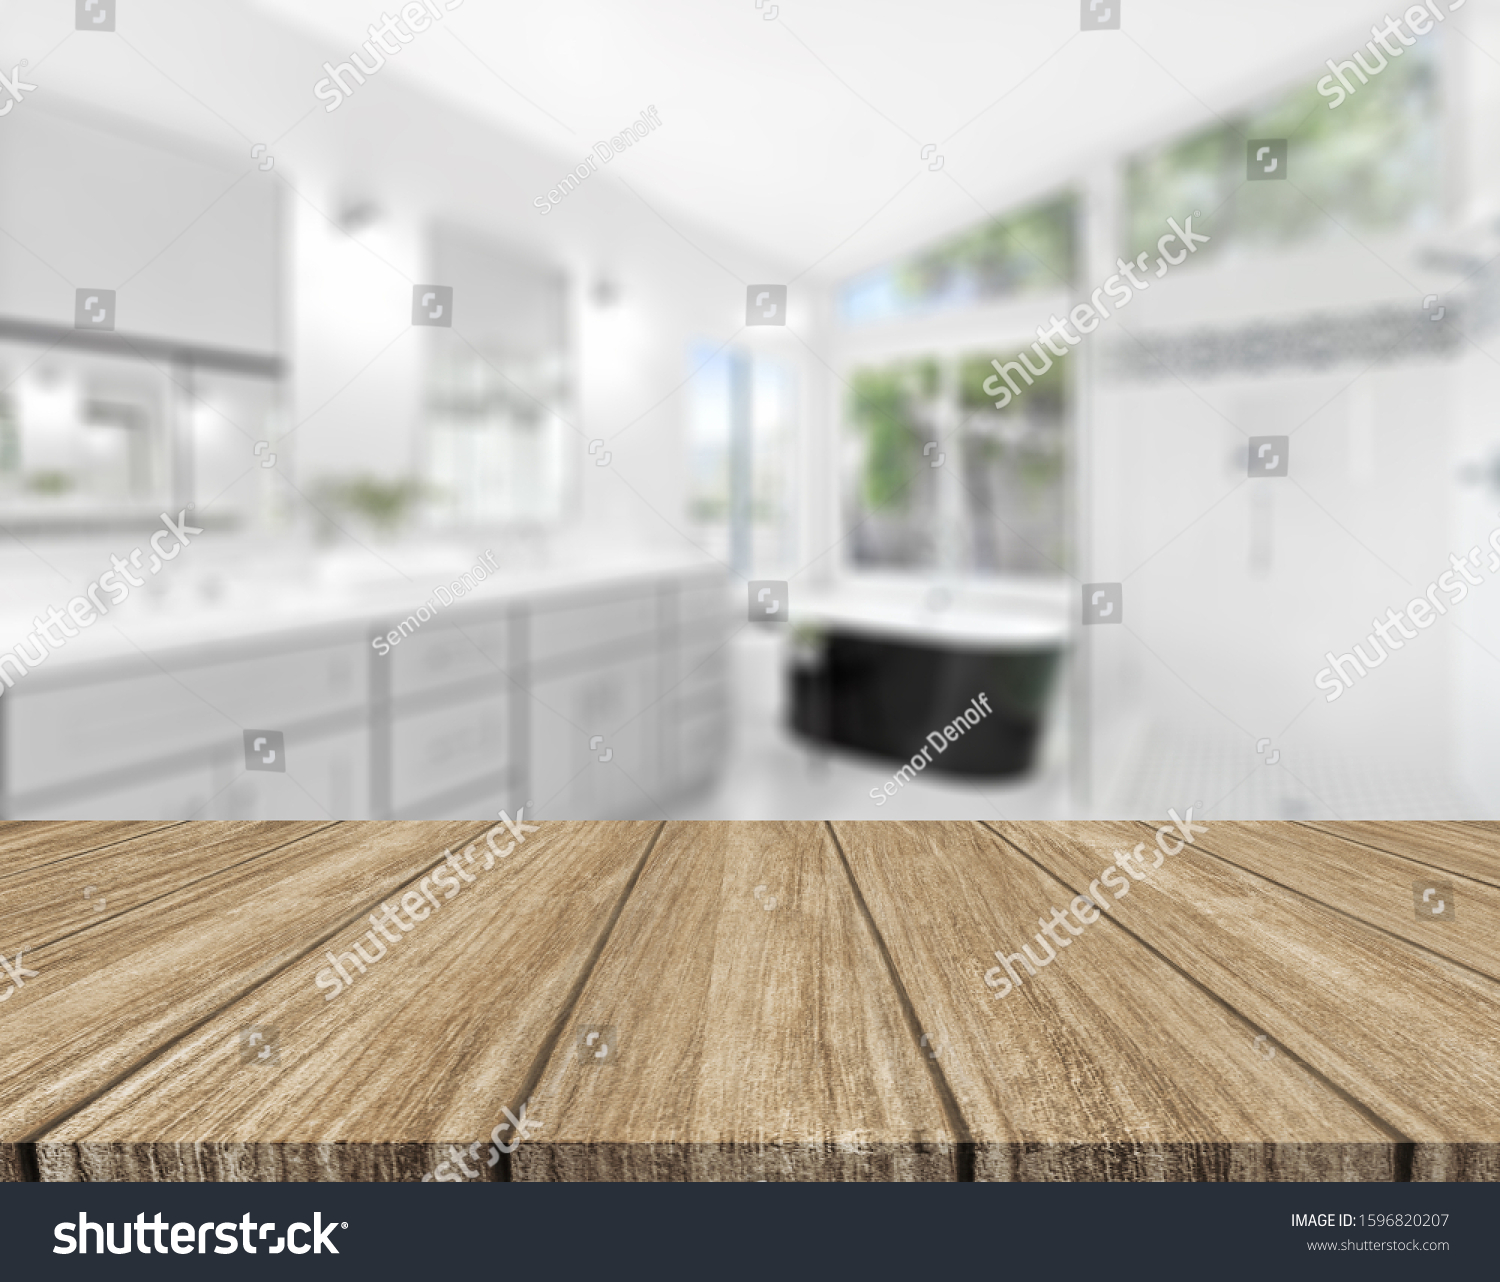 Wood tabletop on blur bathroom background, design key visual layout #1596820207